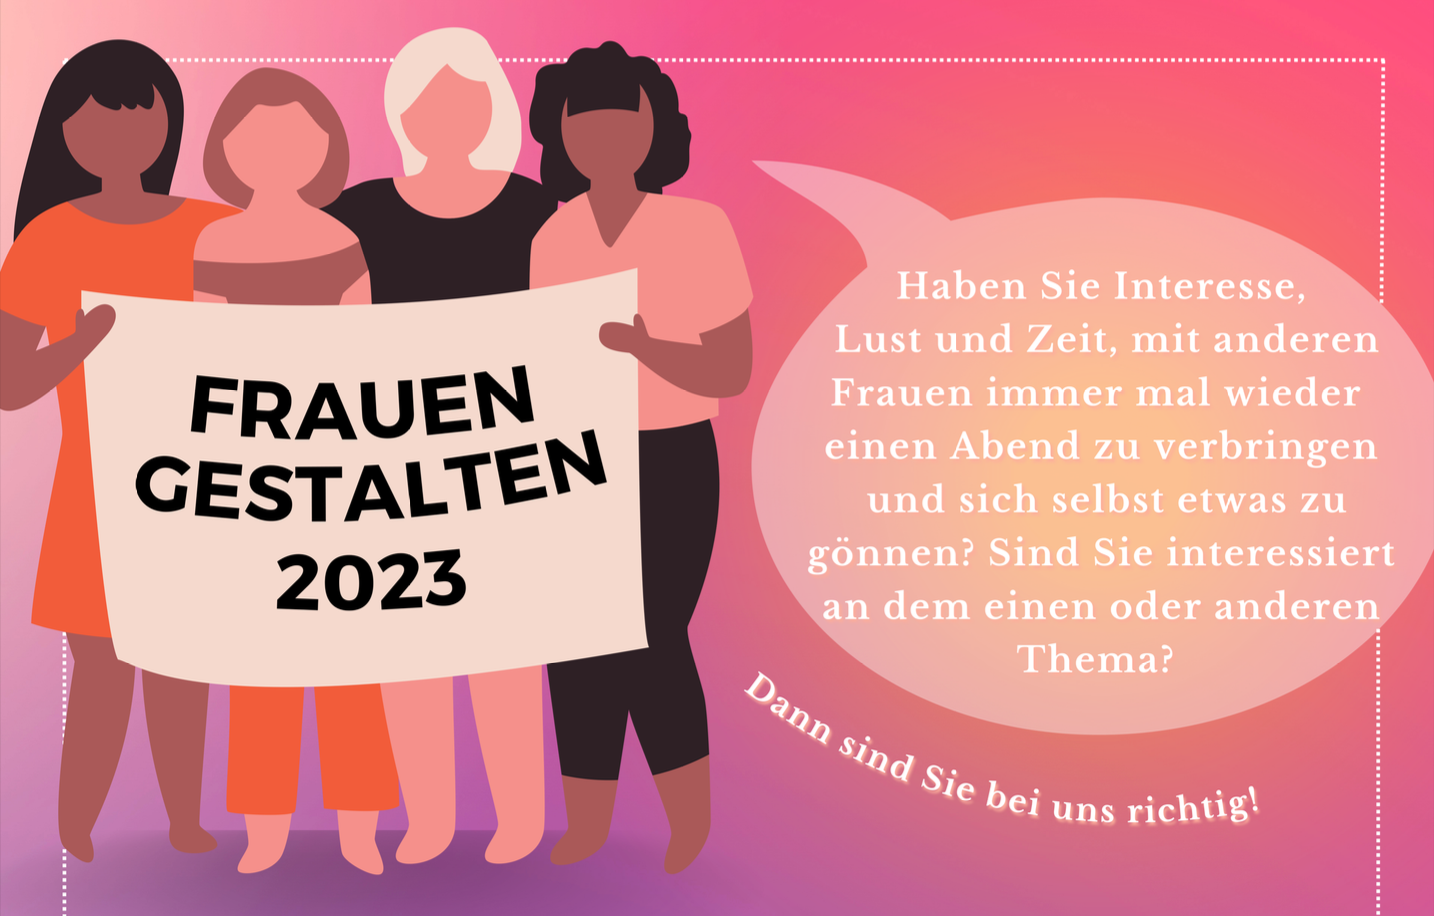 FrauenGestalten Logo 2023 (c) N.G.